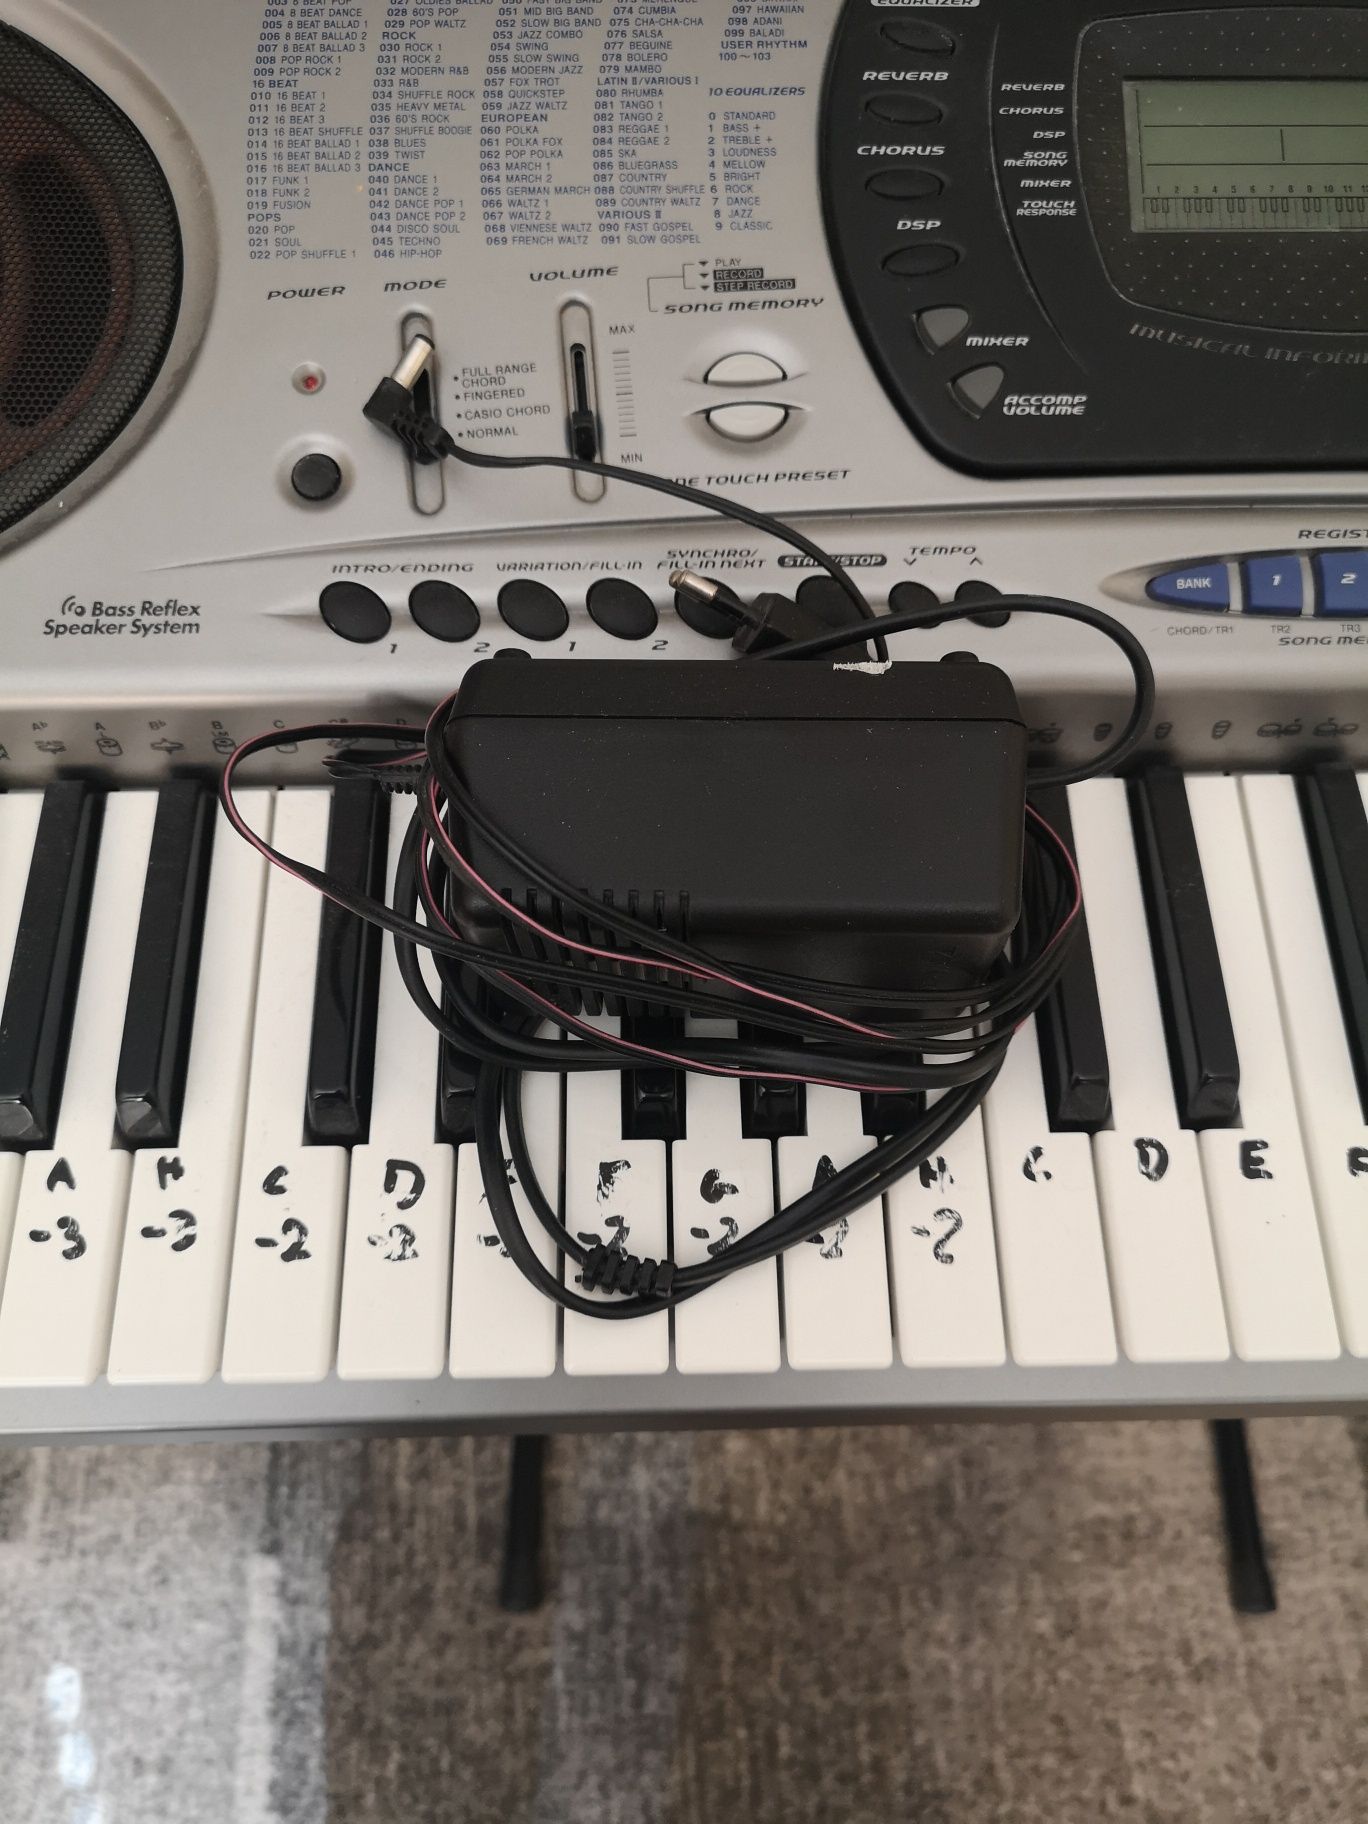 Keyboard Casio CTK-671